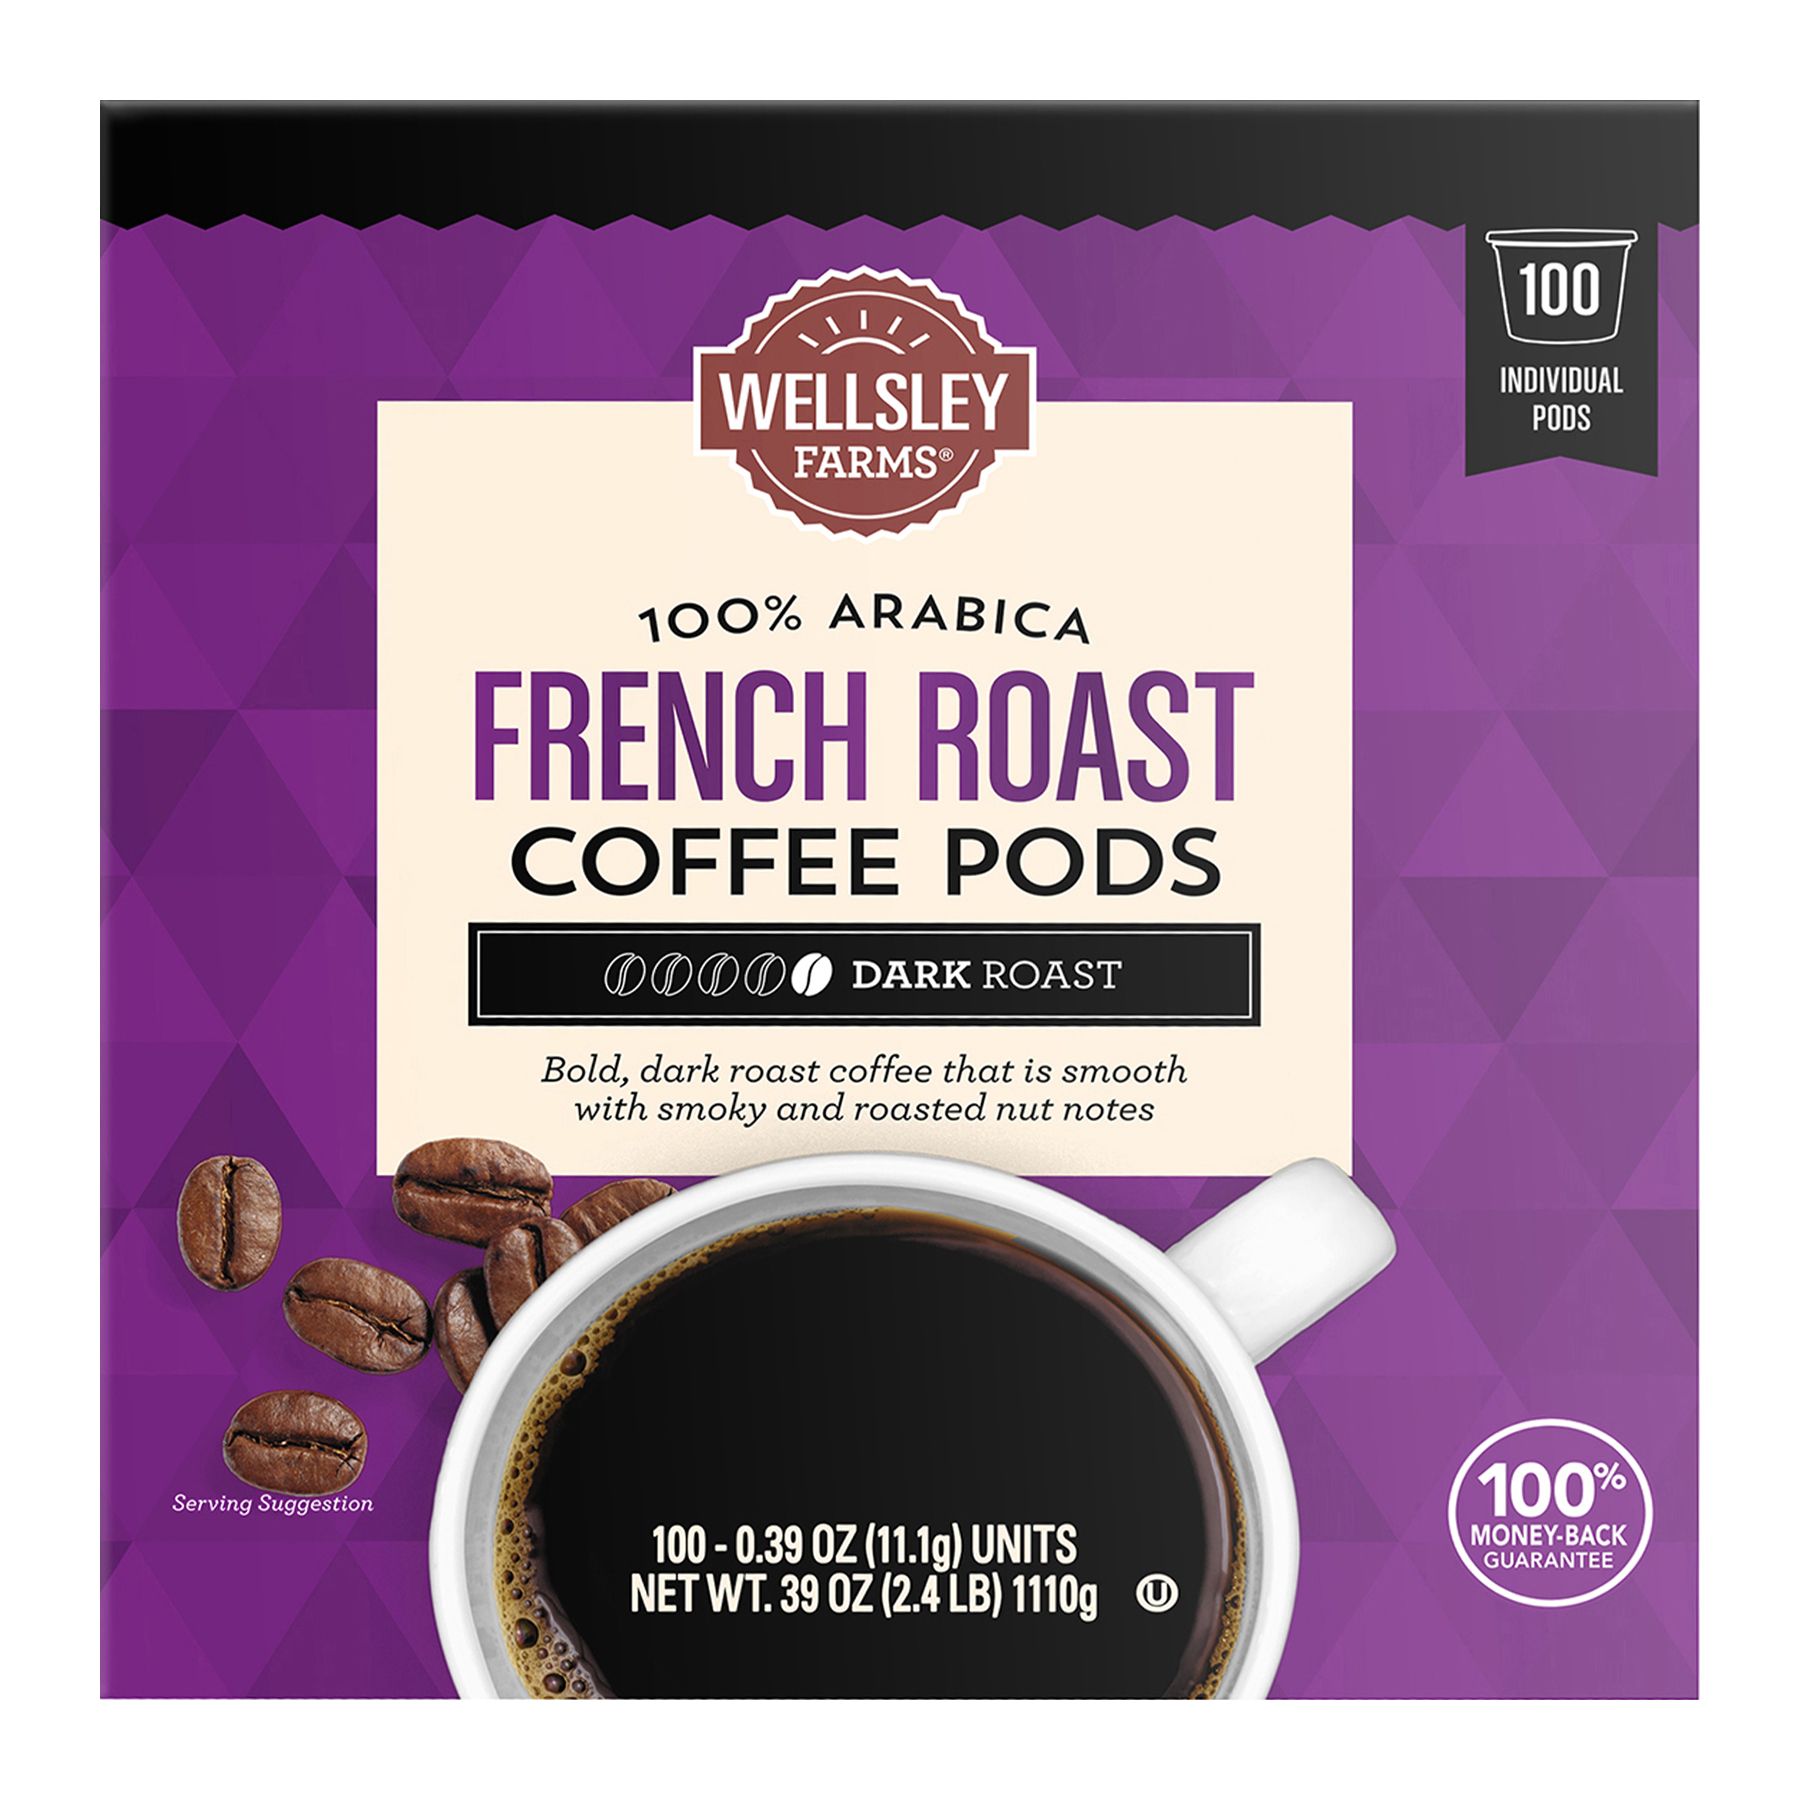 Nescafe 3 in 1 Hazelnut Coffee Latte - Instant Coffee Packets - Single  Serve Flavored Coffee Mix - Bold & Nutty